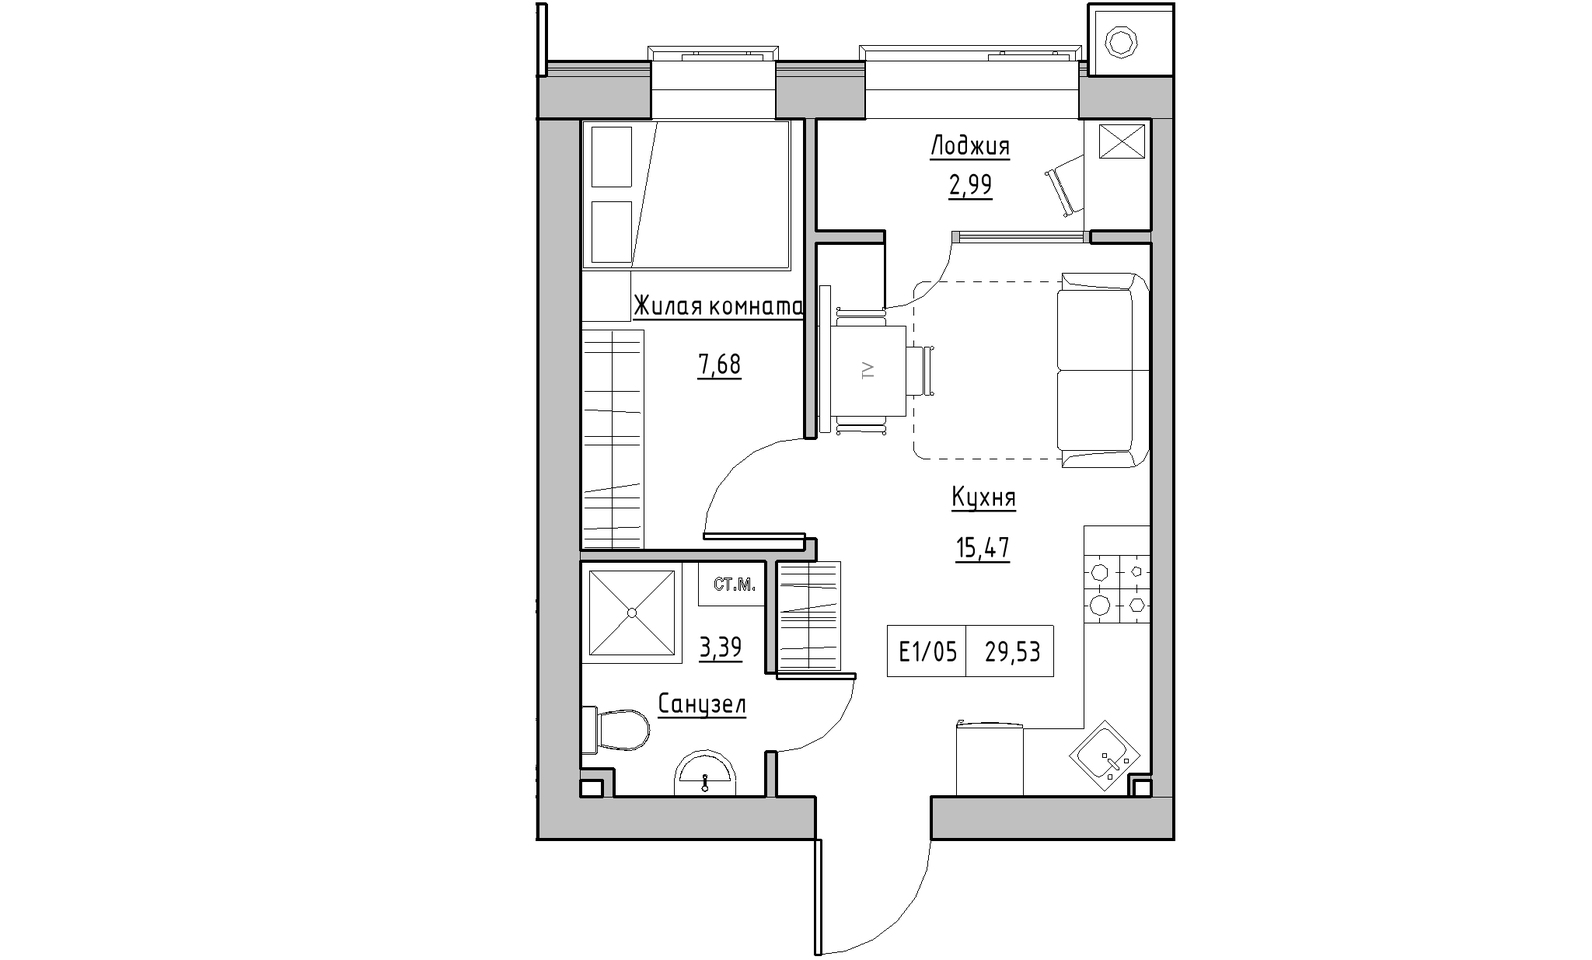 Planning 1-rm flats area 29.53m2, KS-014-01/0006.